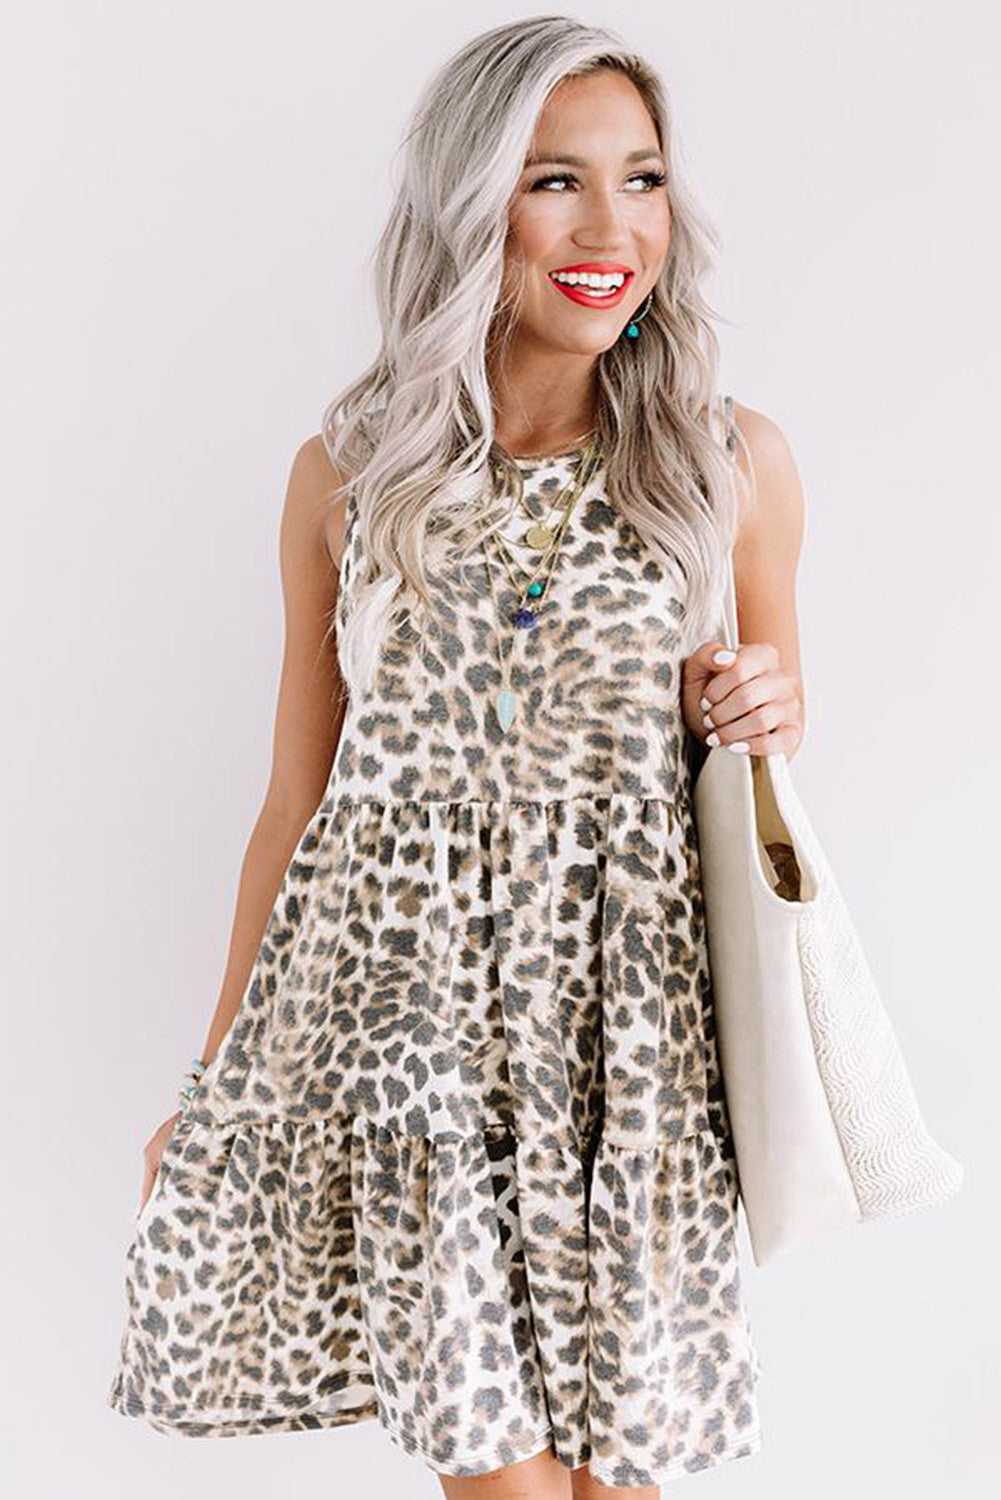 Leopard Print Layered Ruffled Sleeveless Mini Dress